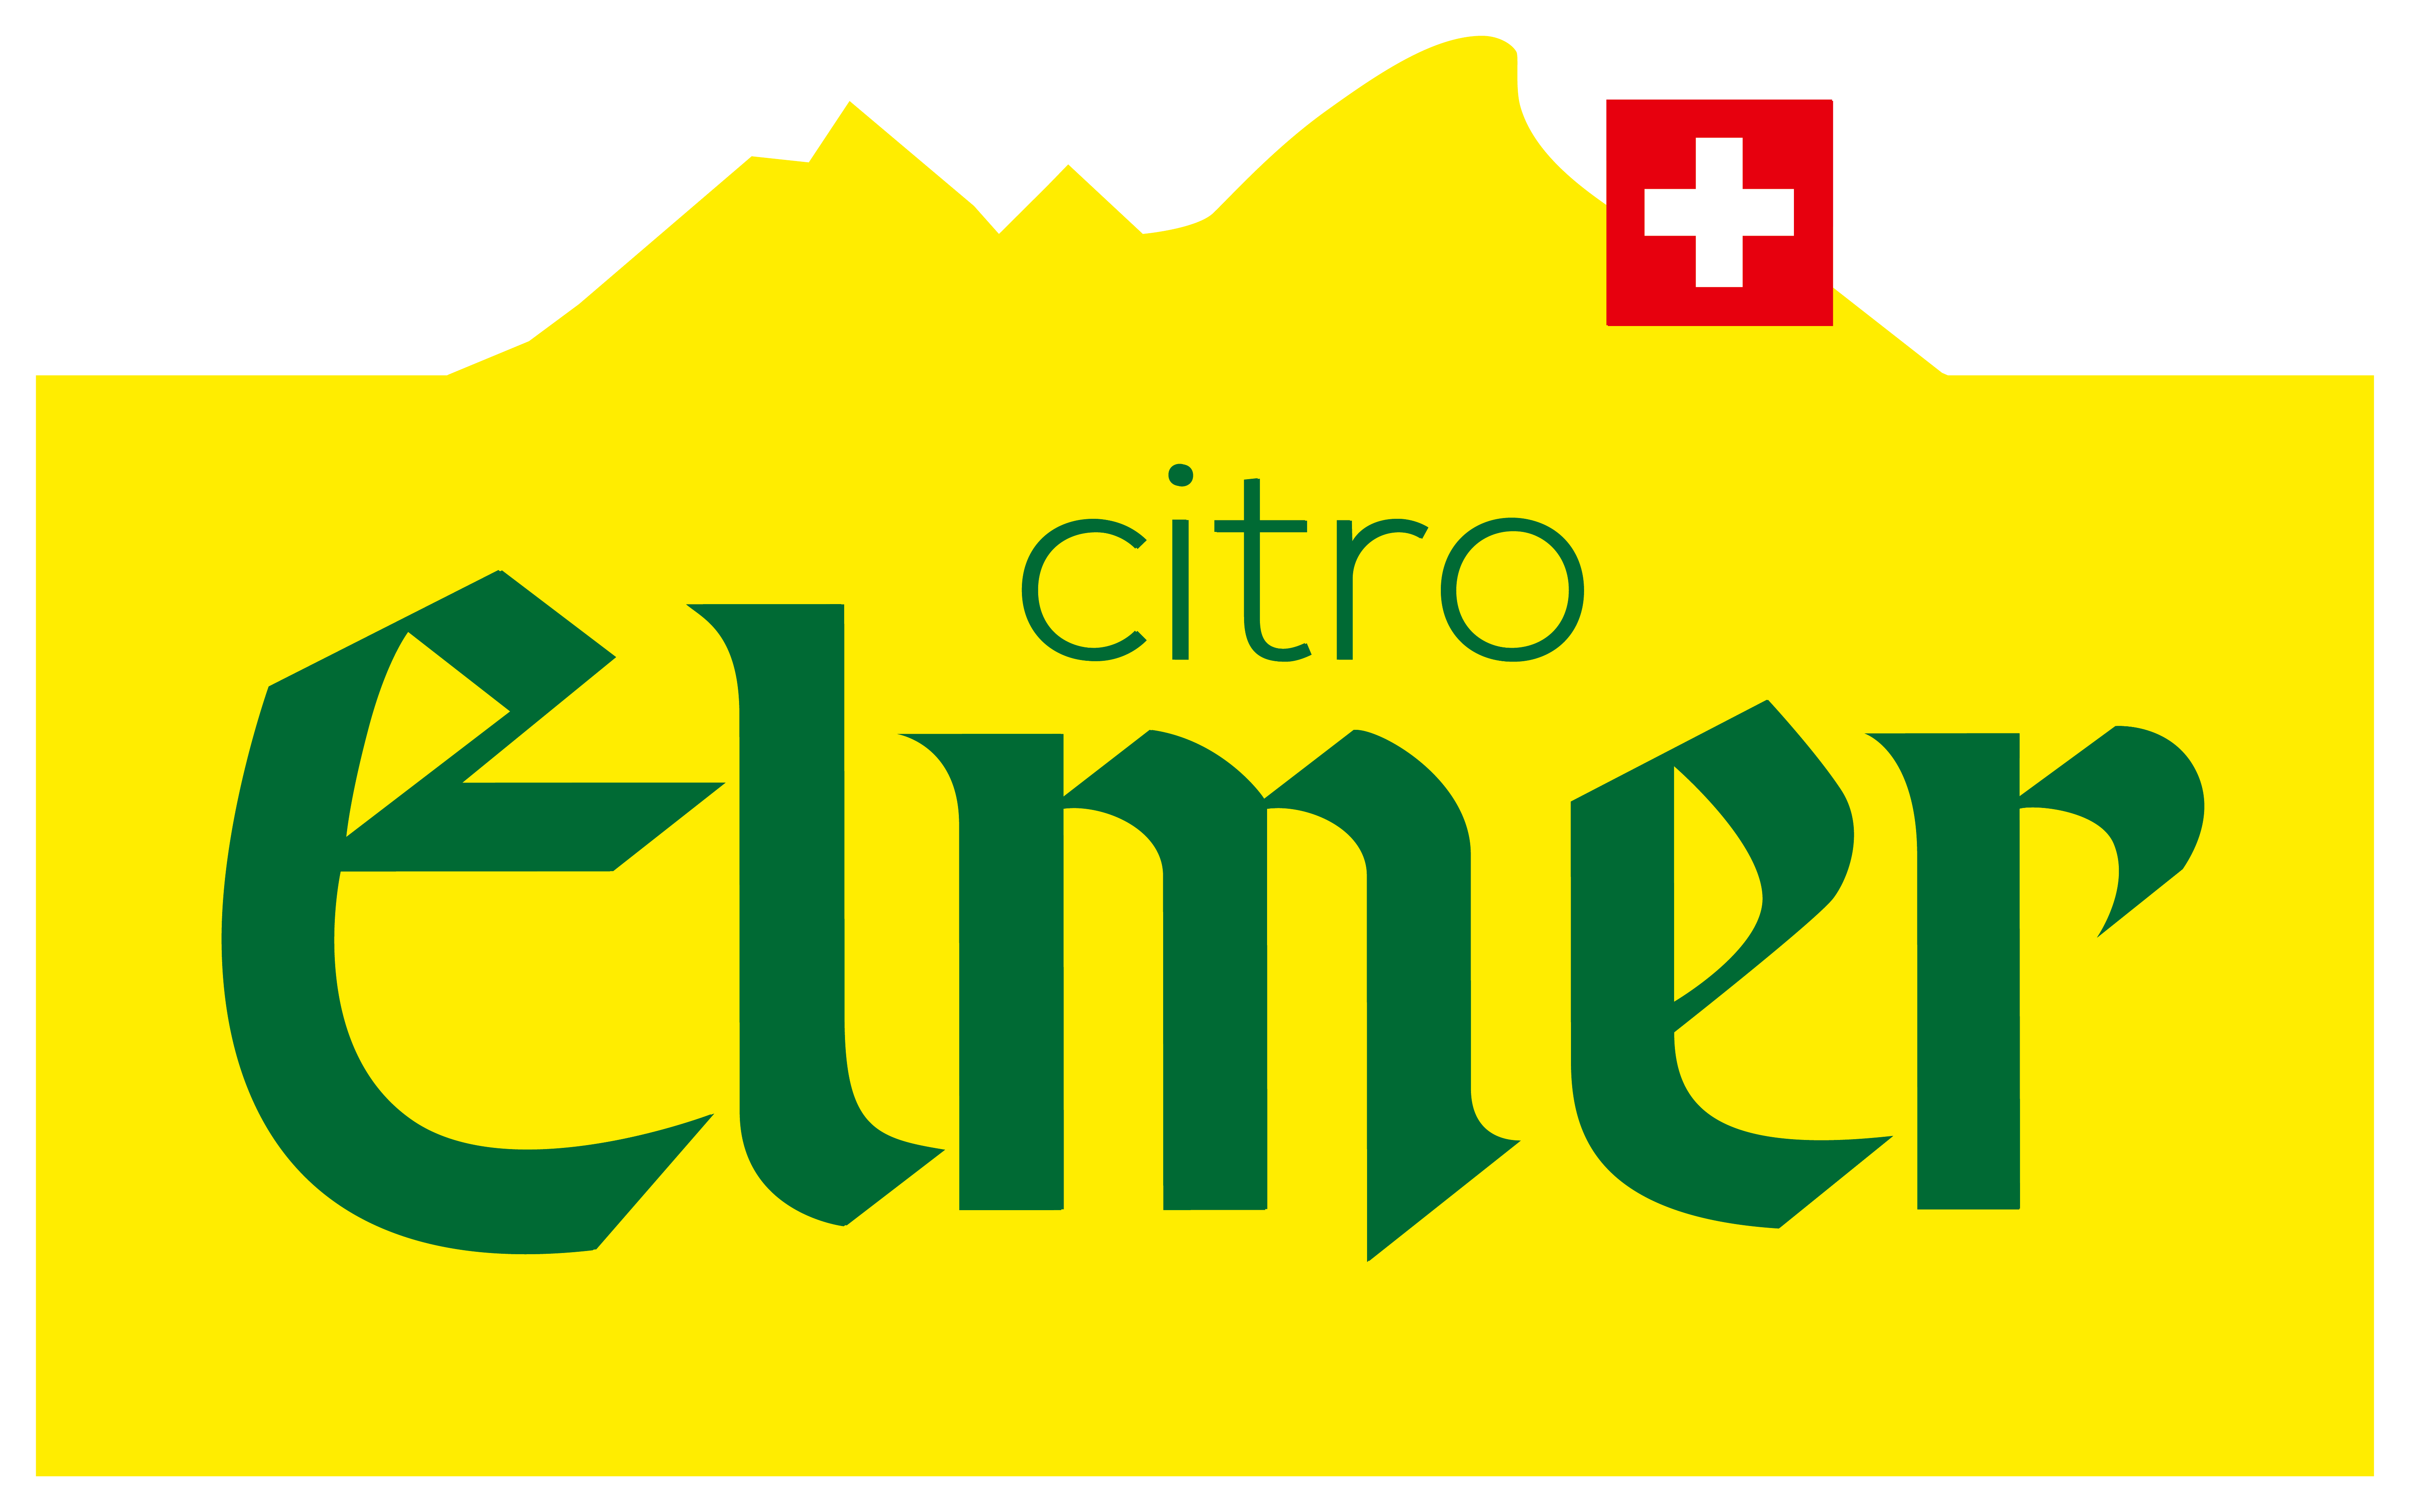 ELMER Citro